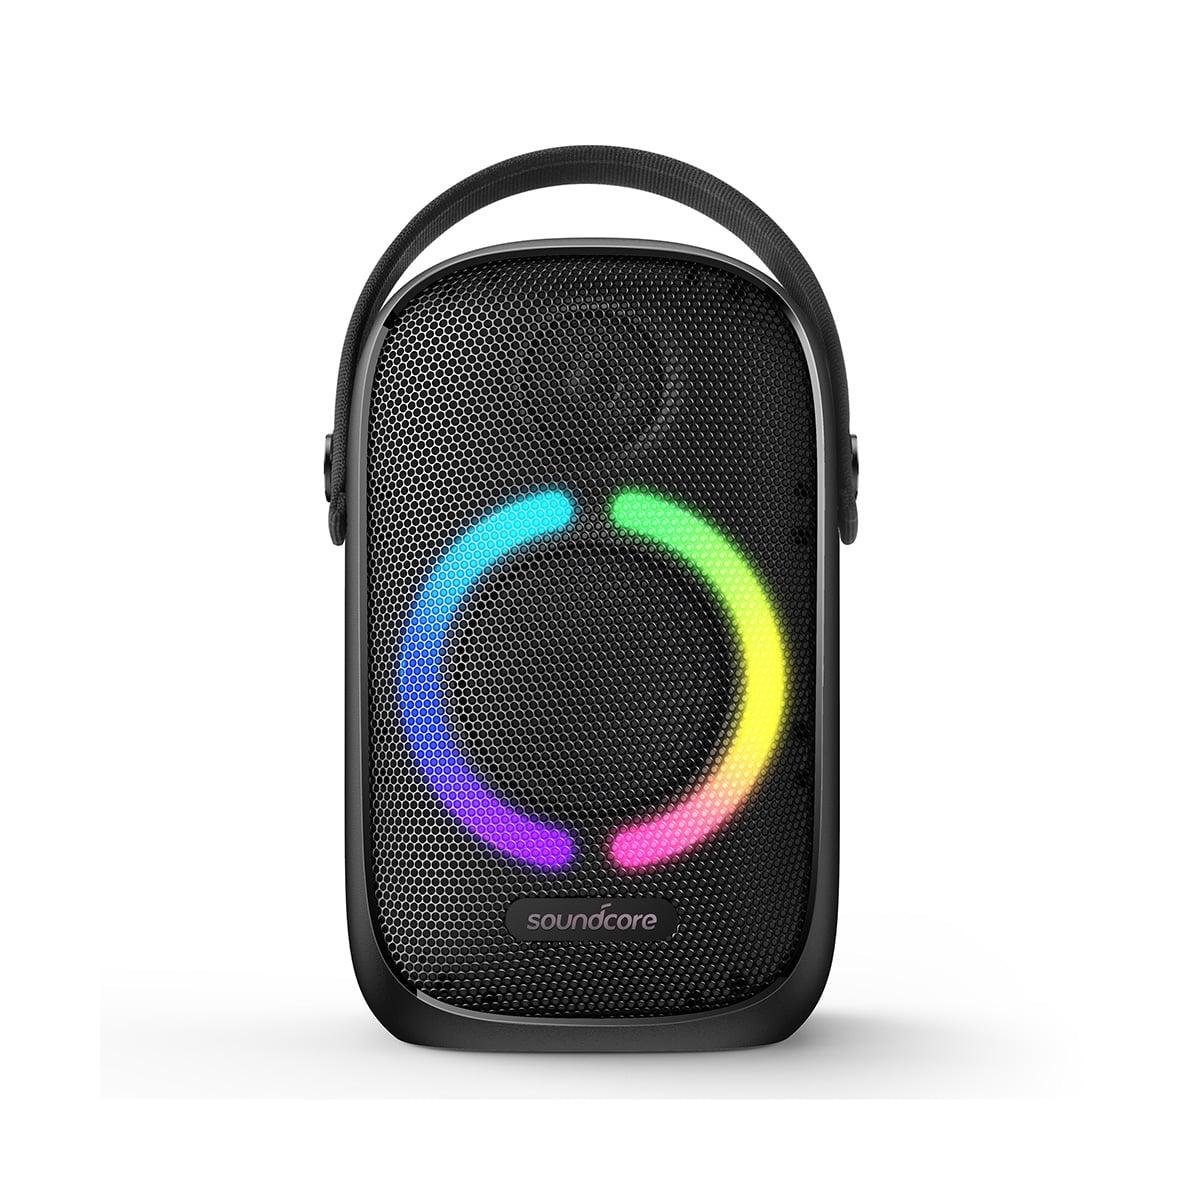 Rave Neo Portable Bluetooth Speaker